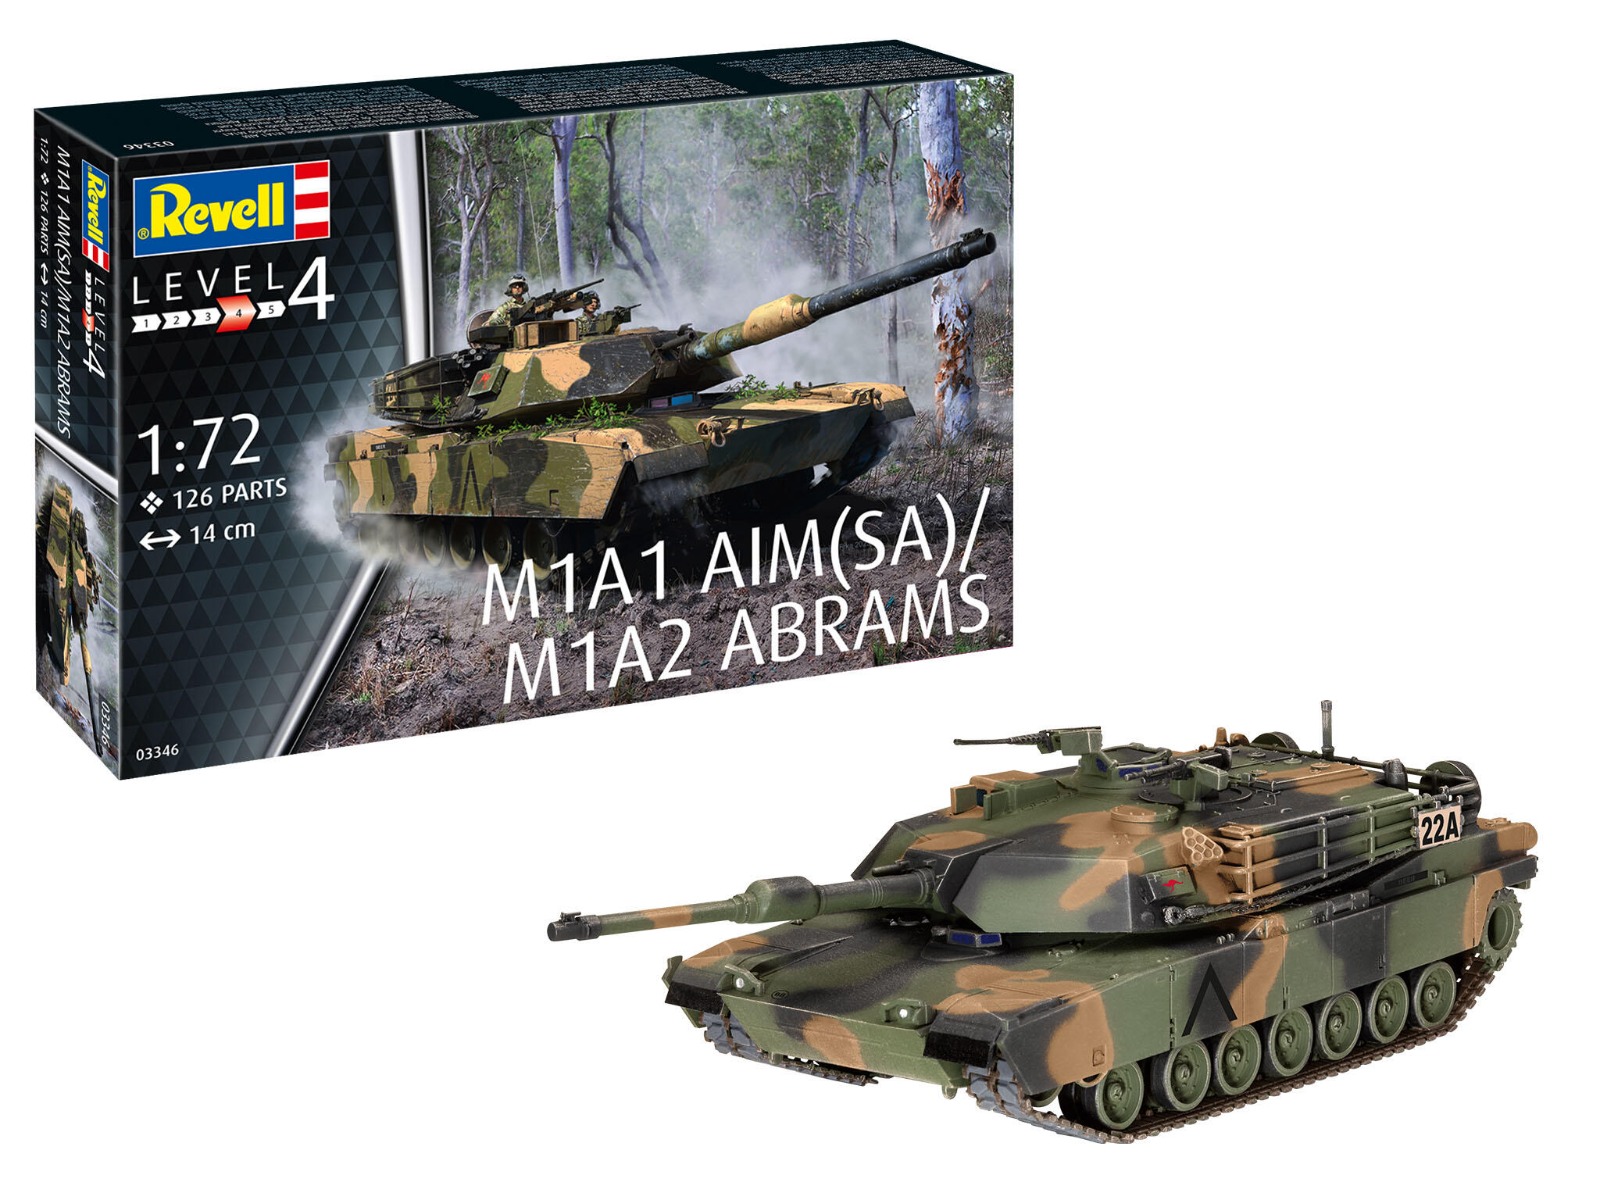 1:72 Revell 03346 M1A1 AIM(SA)/ M1A2 Abrams Tank Plastic kit